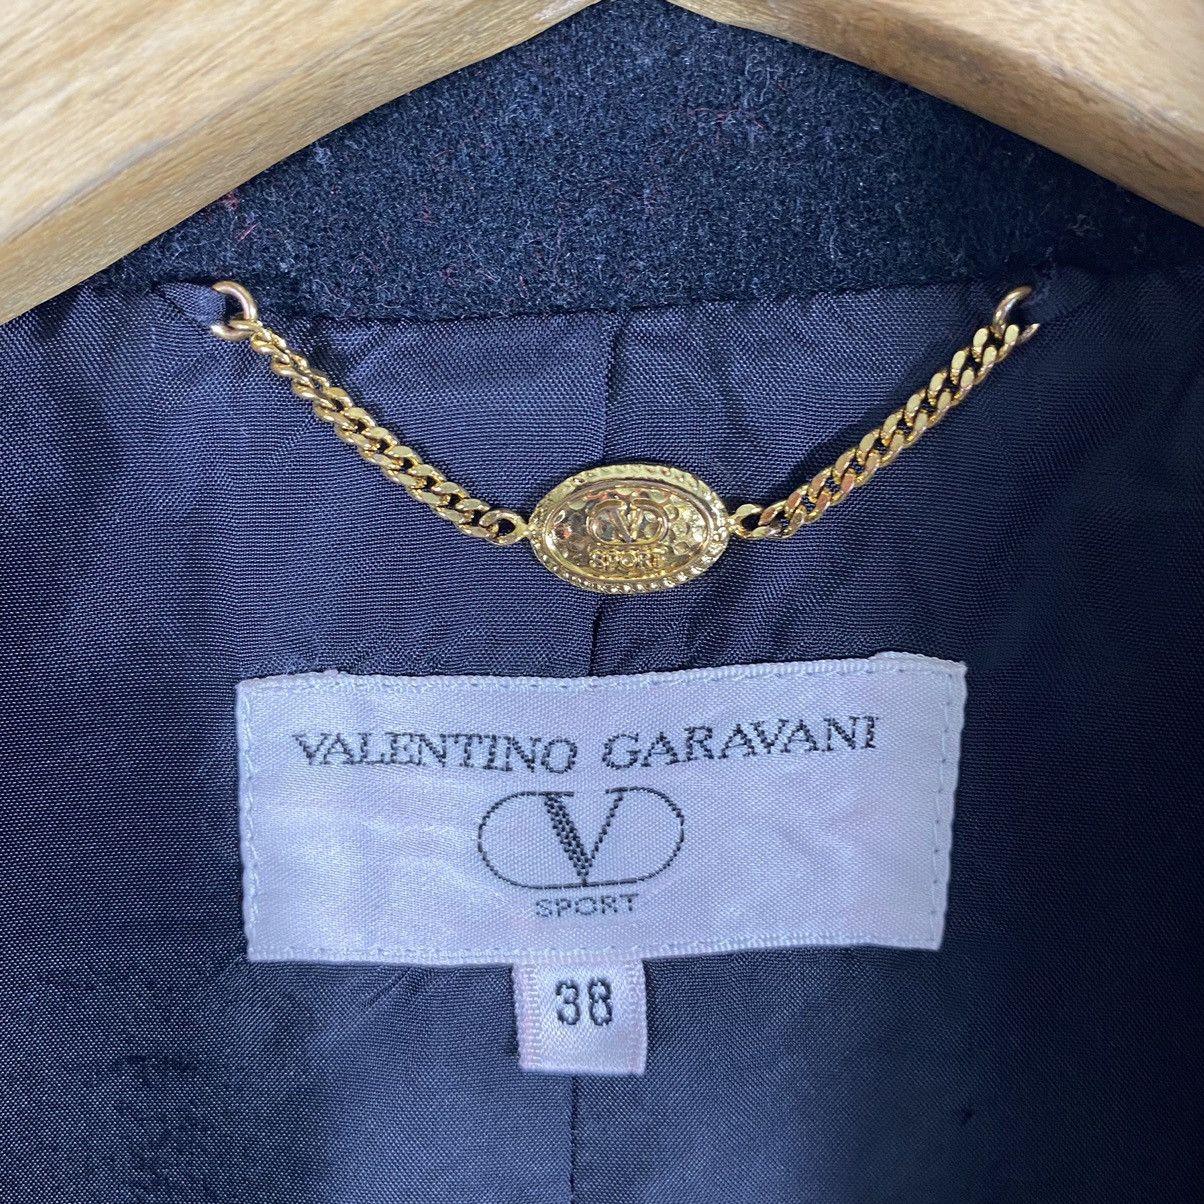 Valentino Garavani Sport Wool Jacket - 6